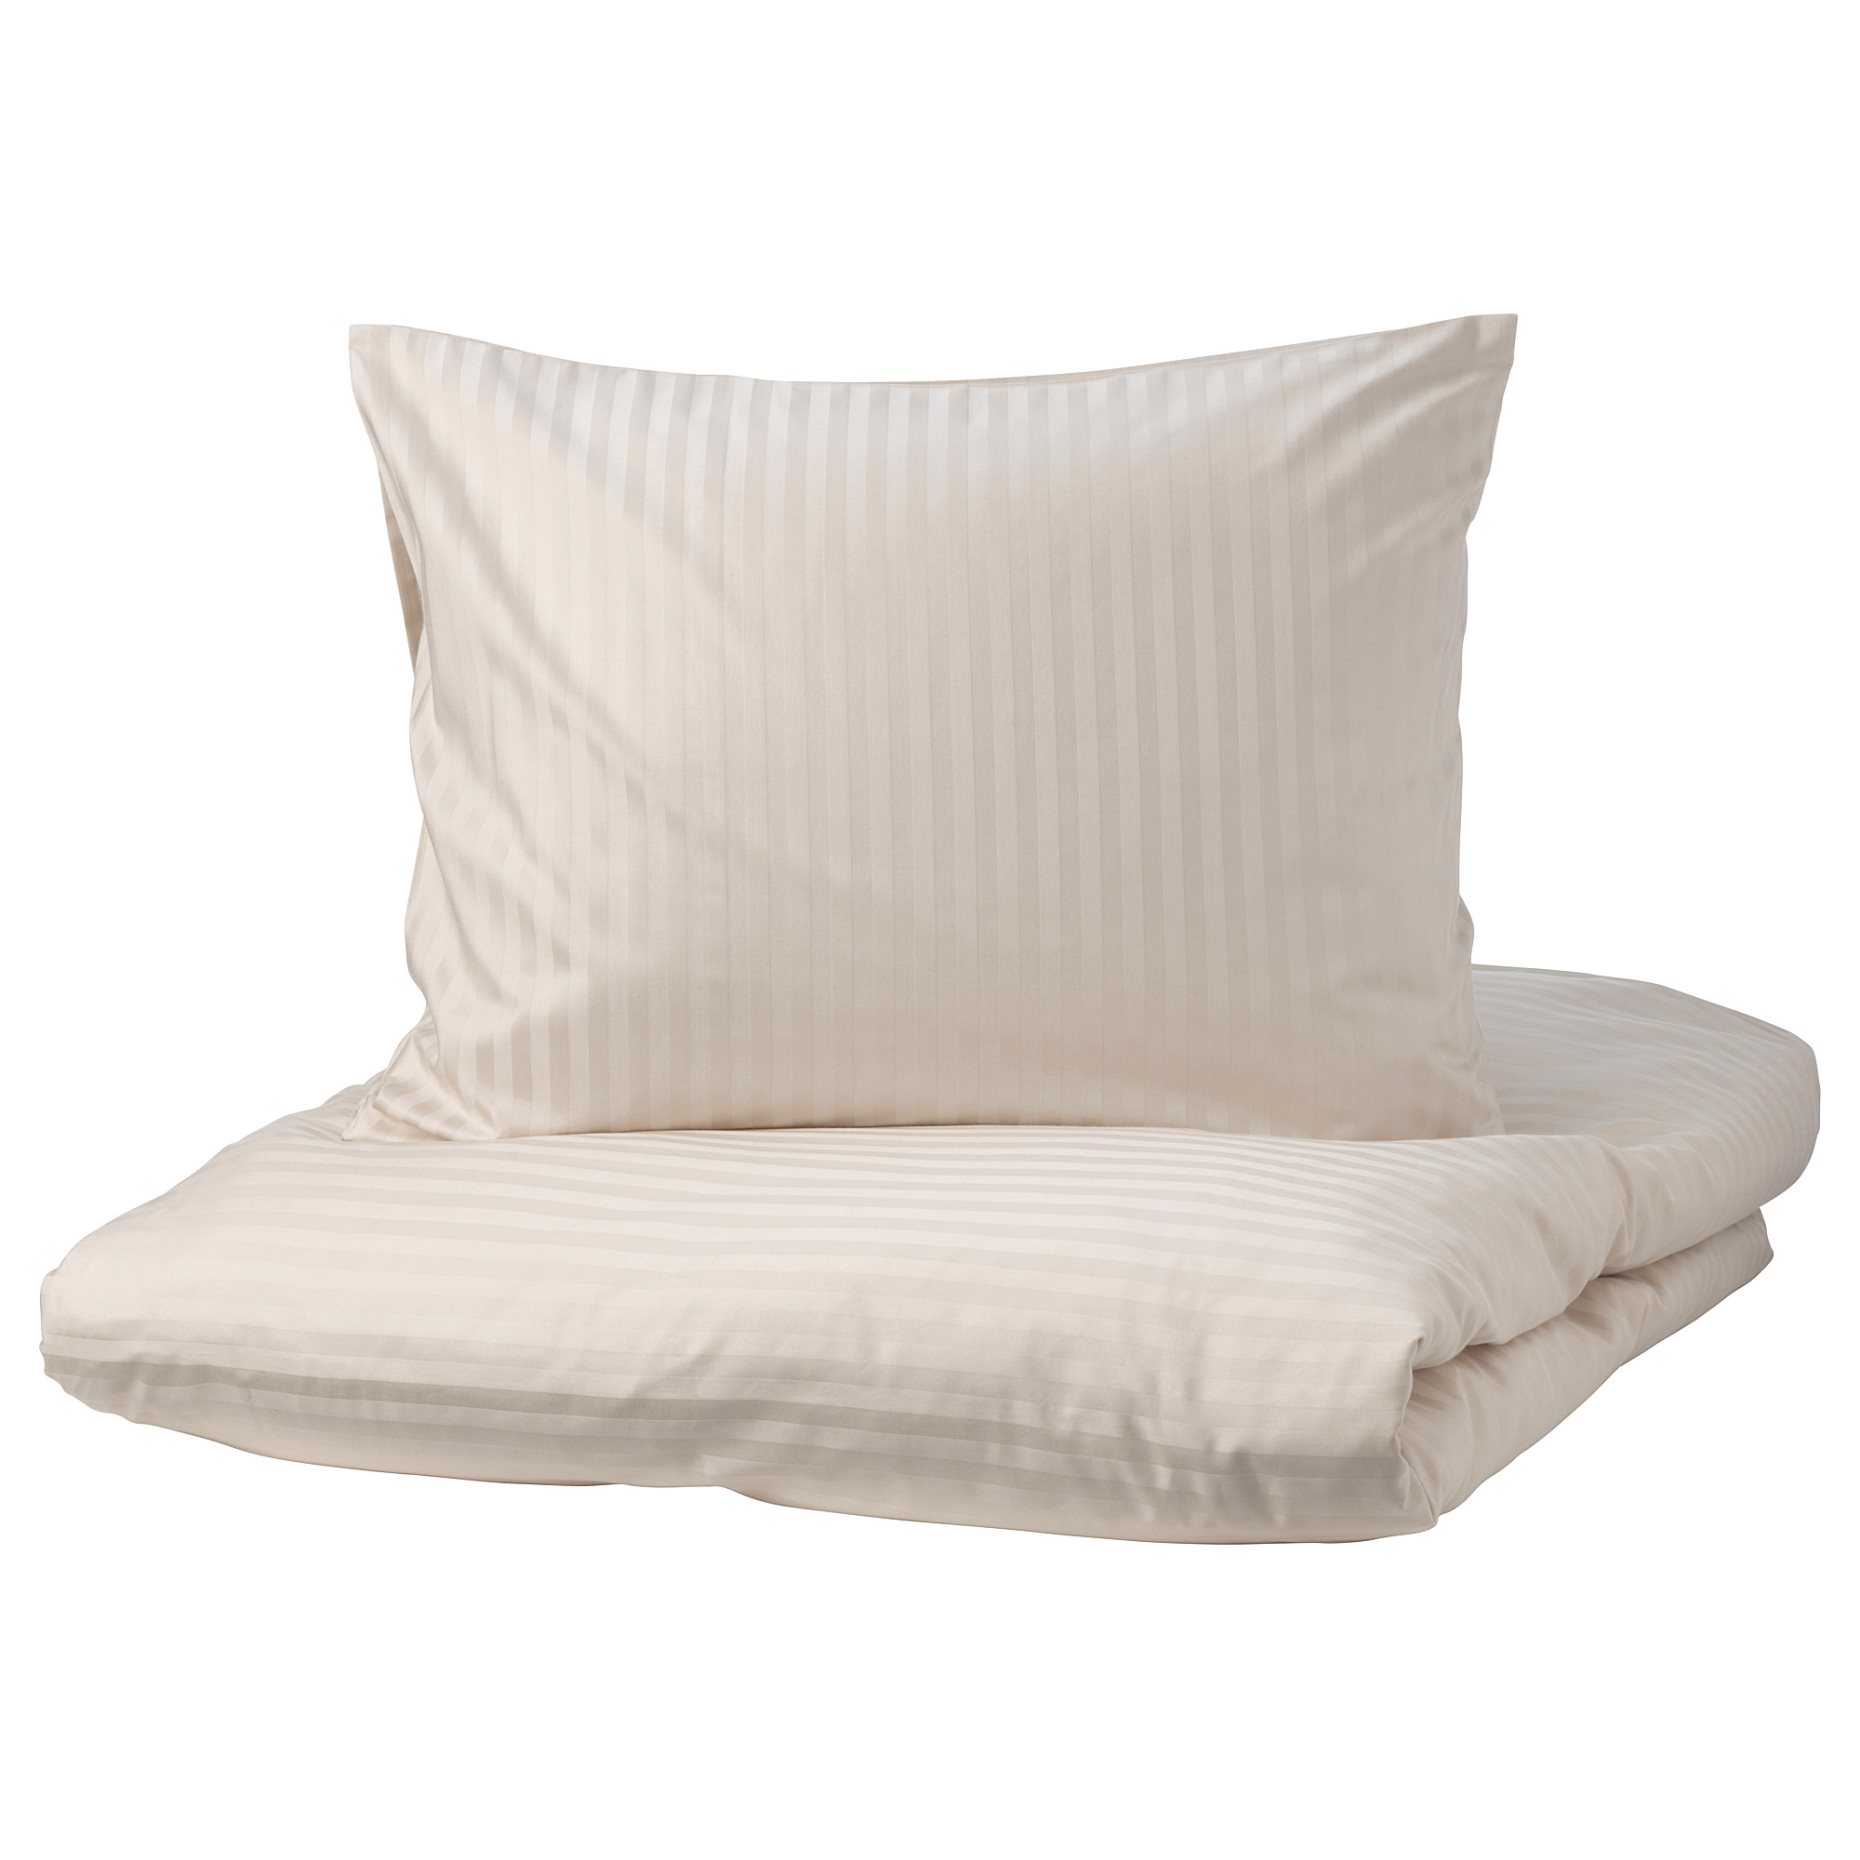 NATTJASMIN, quilt cover and 2 pillowcases, 240x220/50x60 cm, 804.426.07